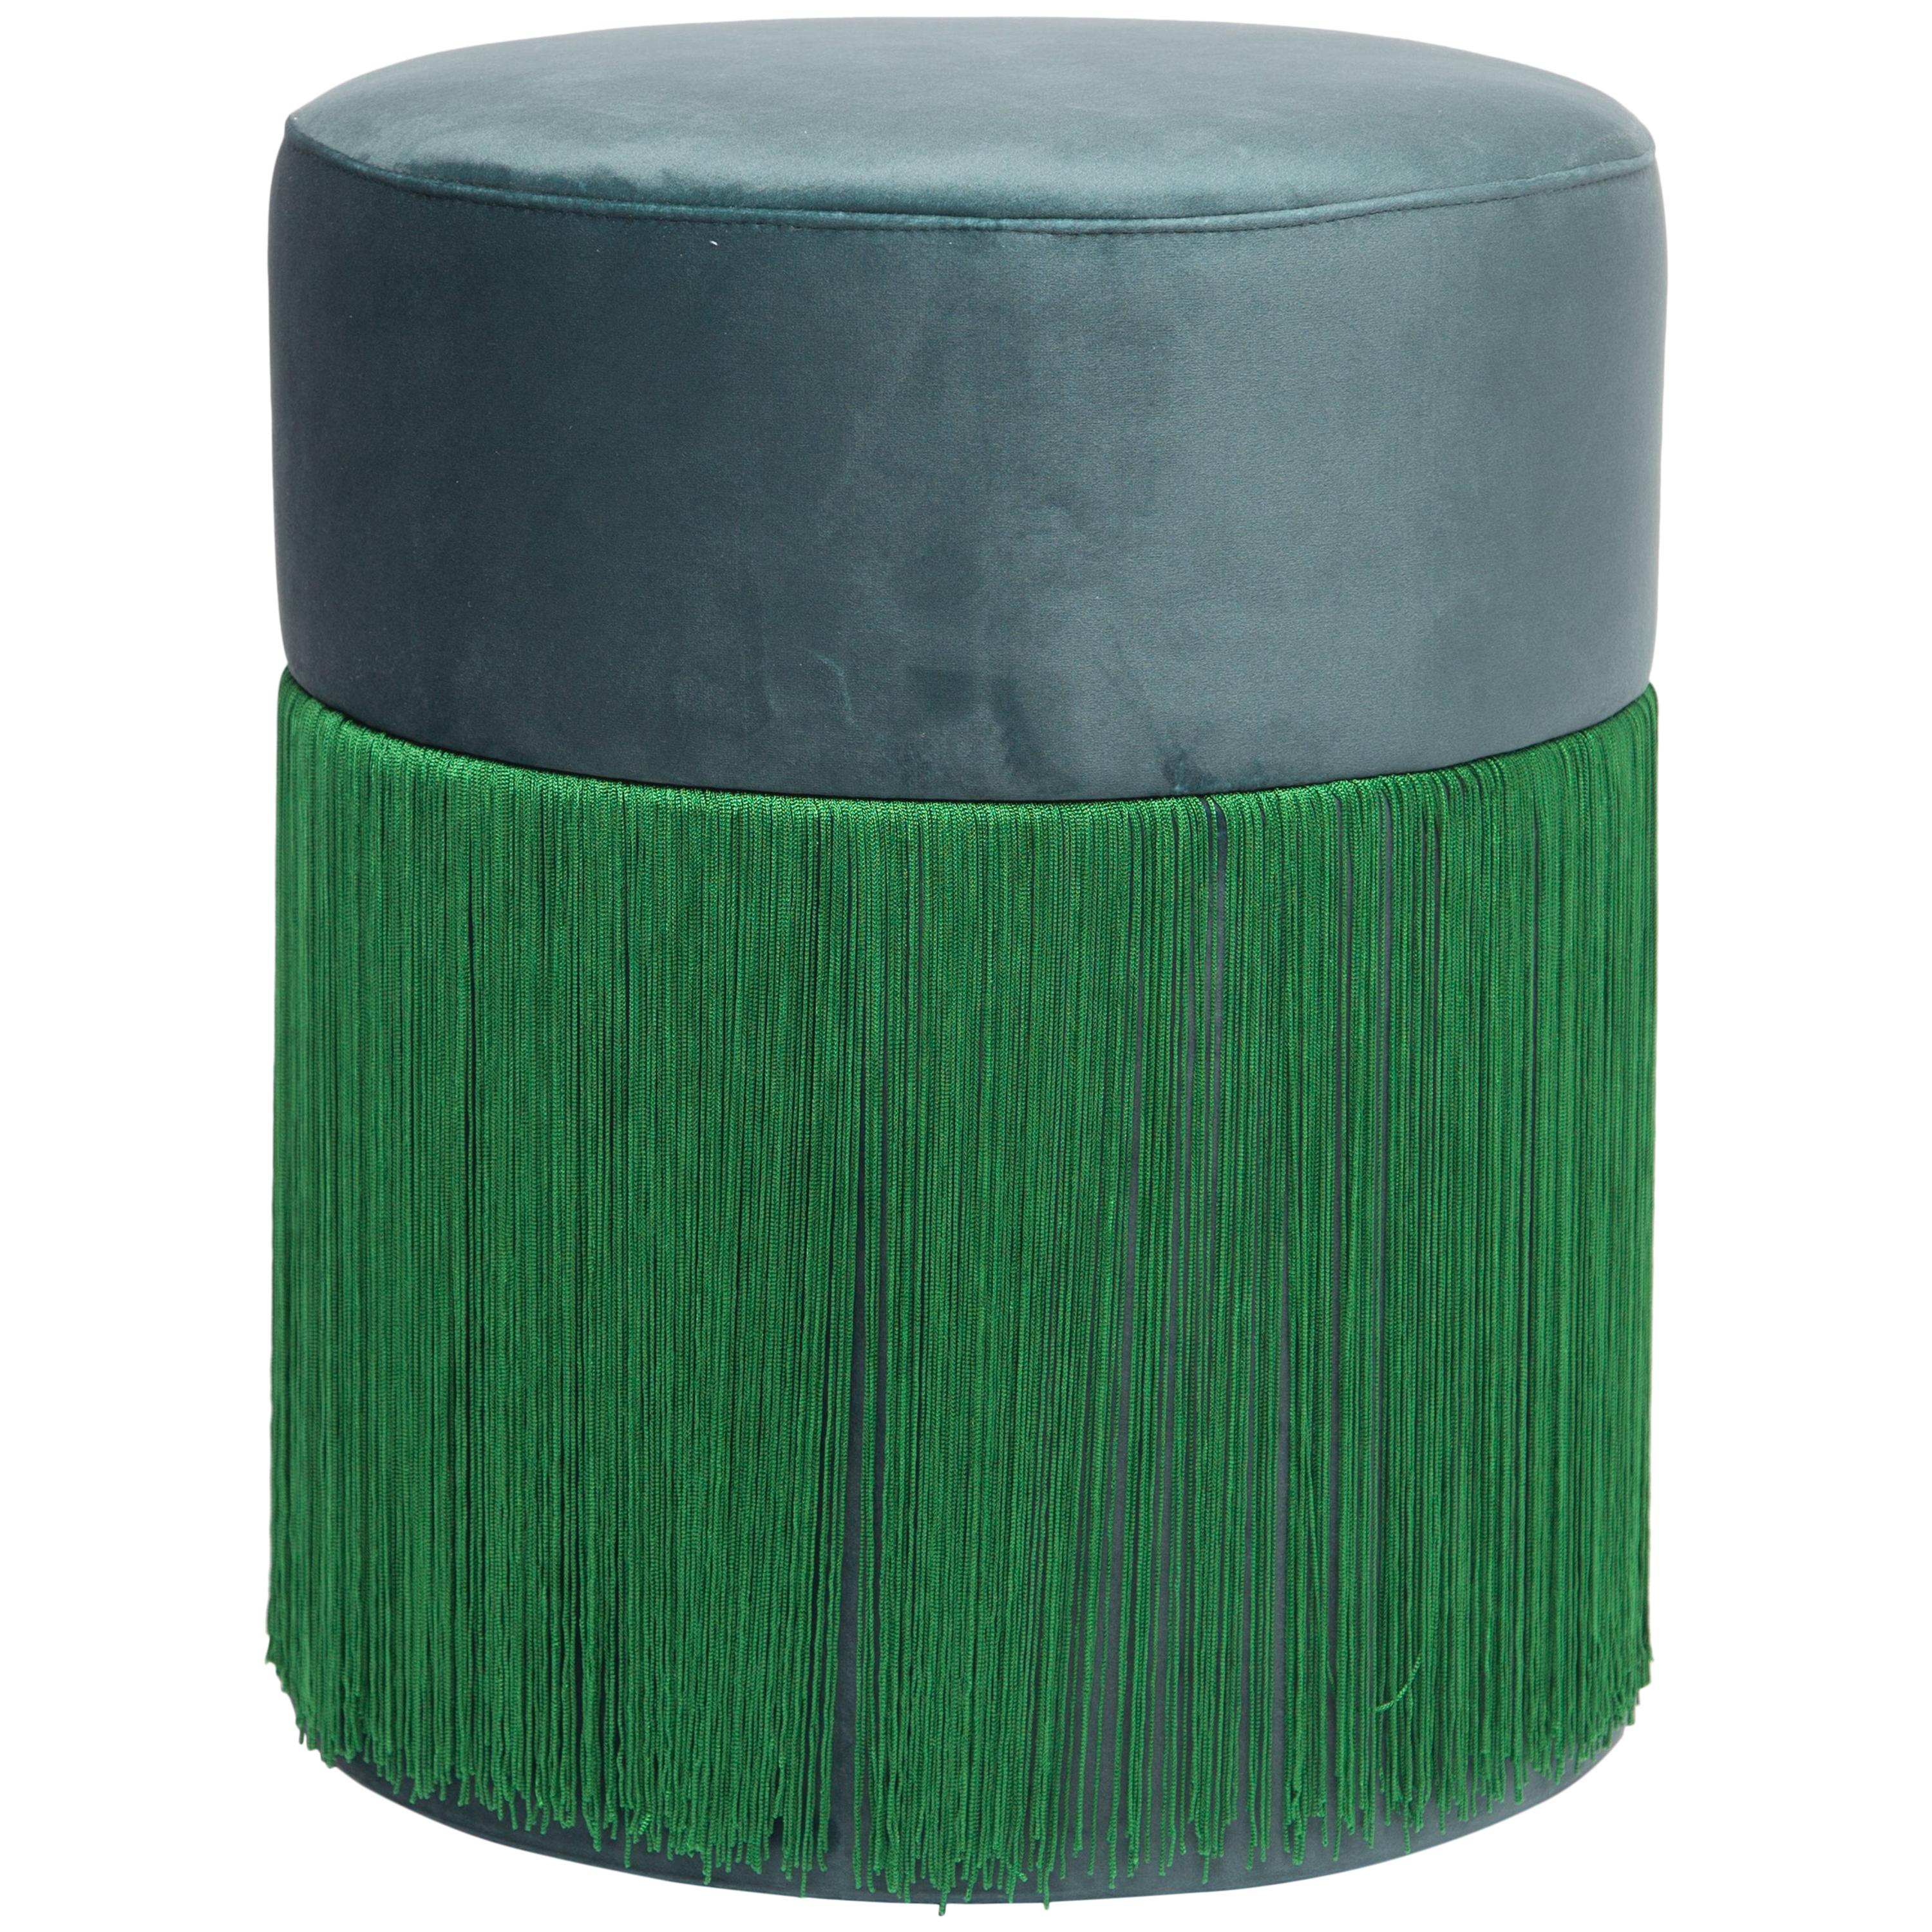 Pouf Pill Emerald Green in Velvet Upholstery with Fringes For Sale